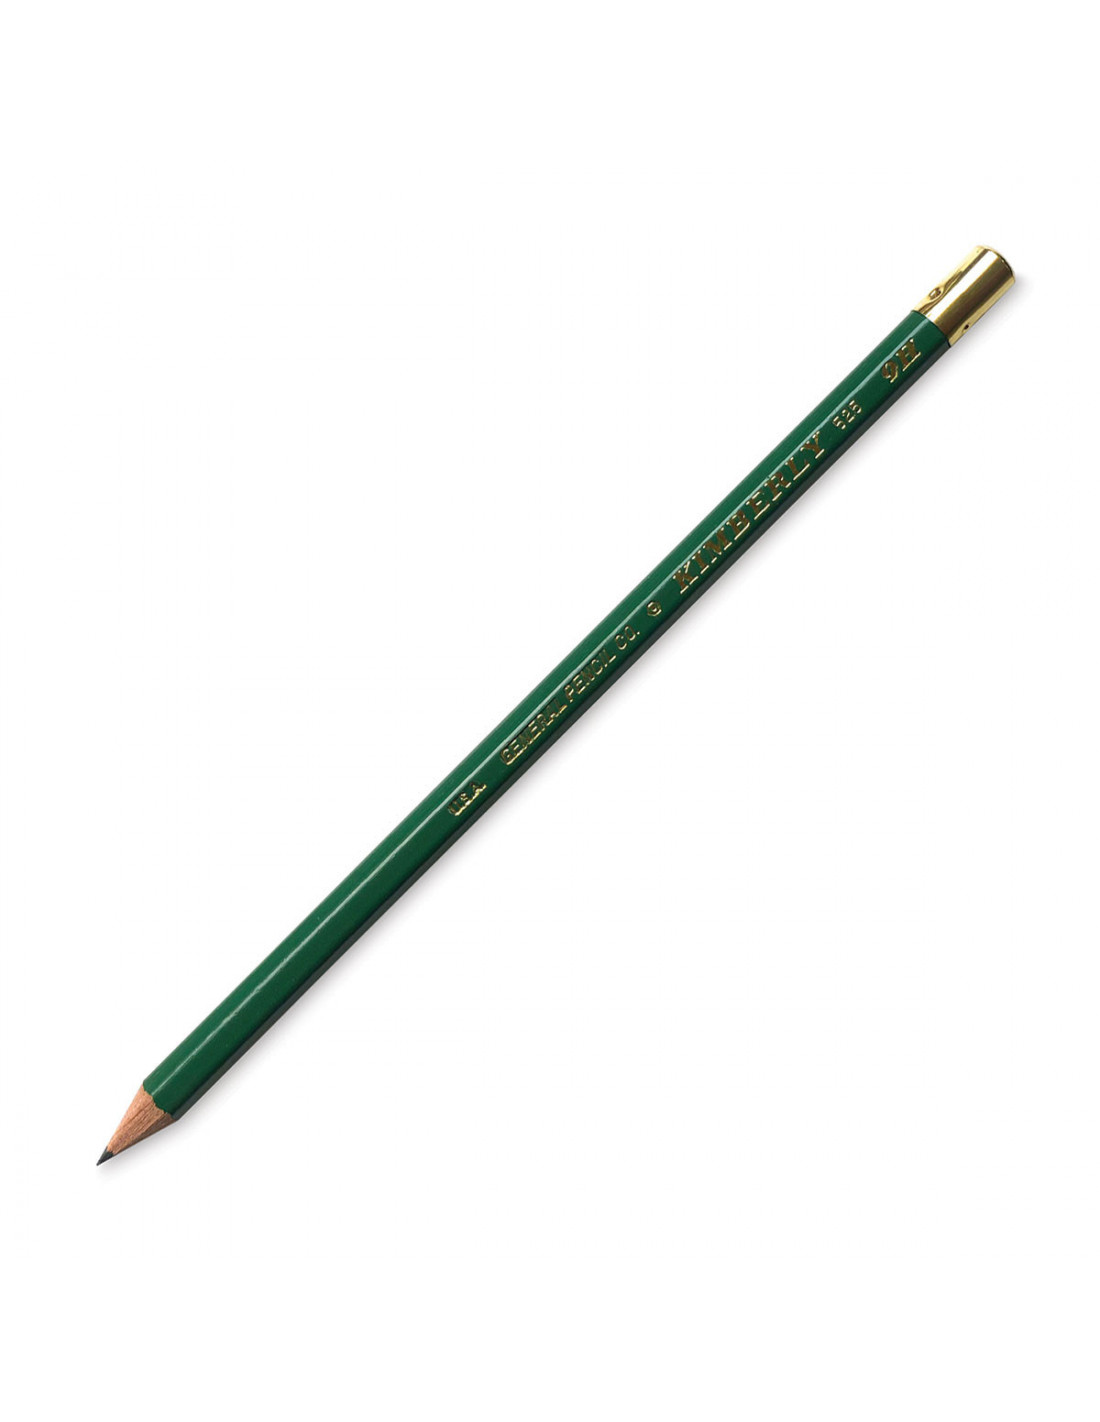 Crayon graphite 9H - Kimberly 525 - General Pencil Company